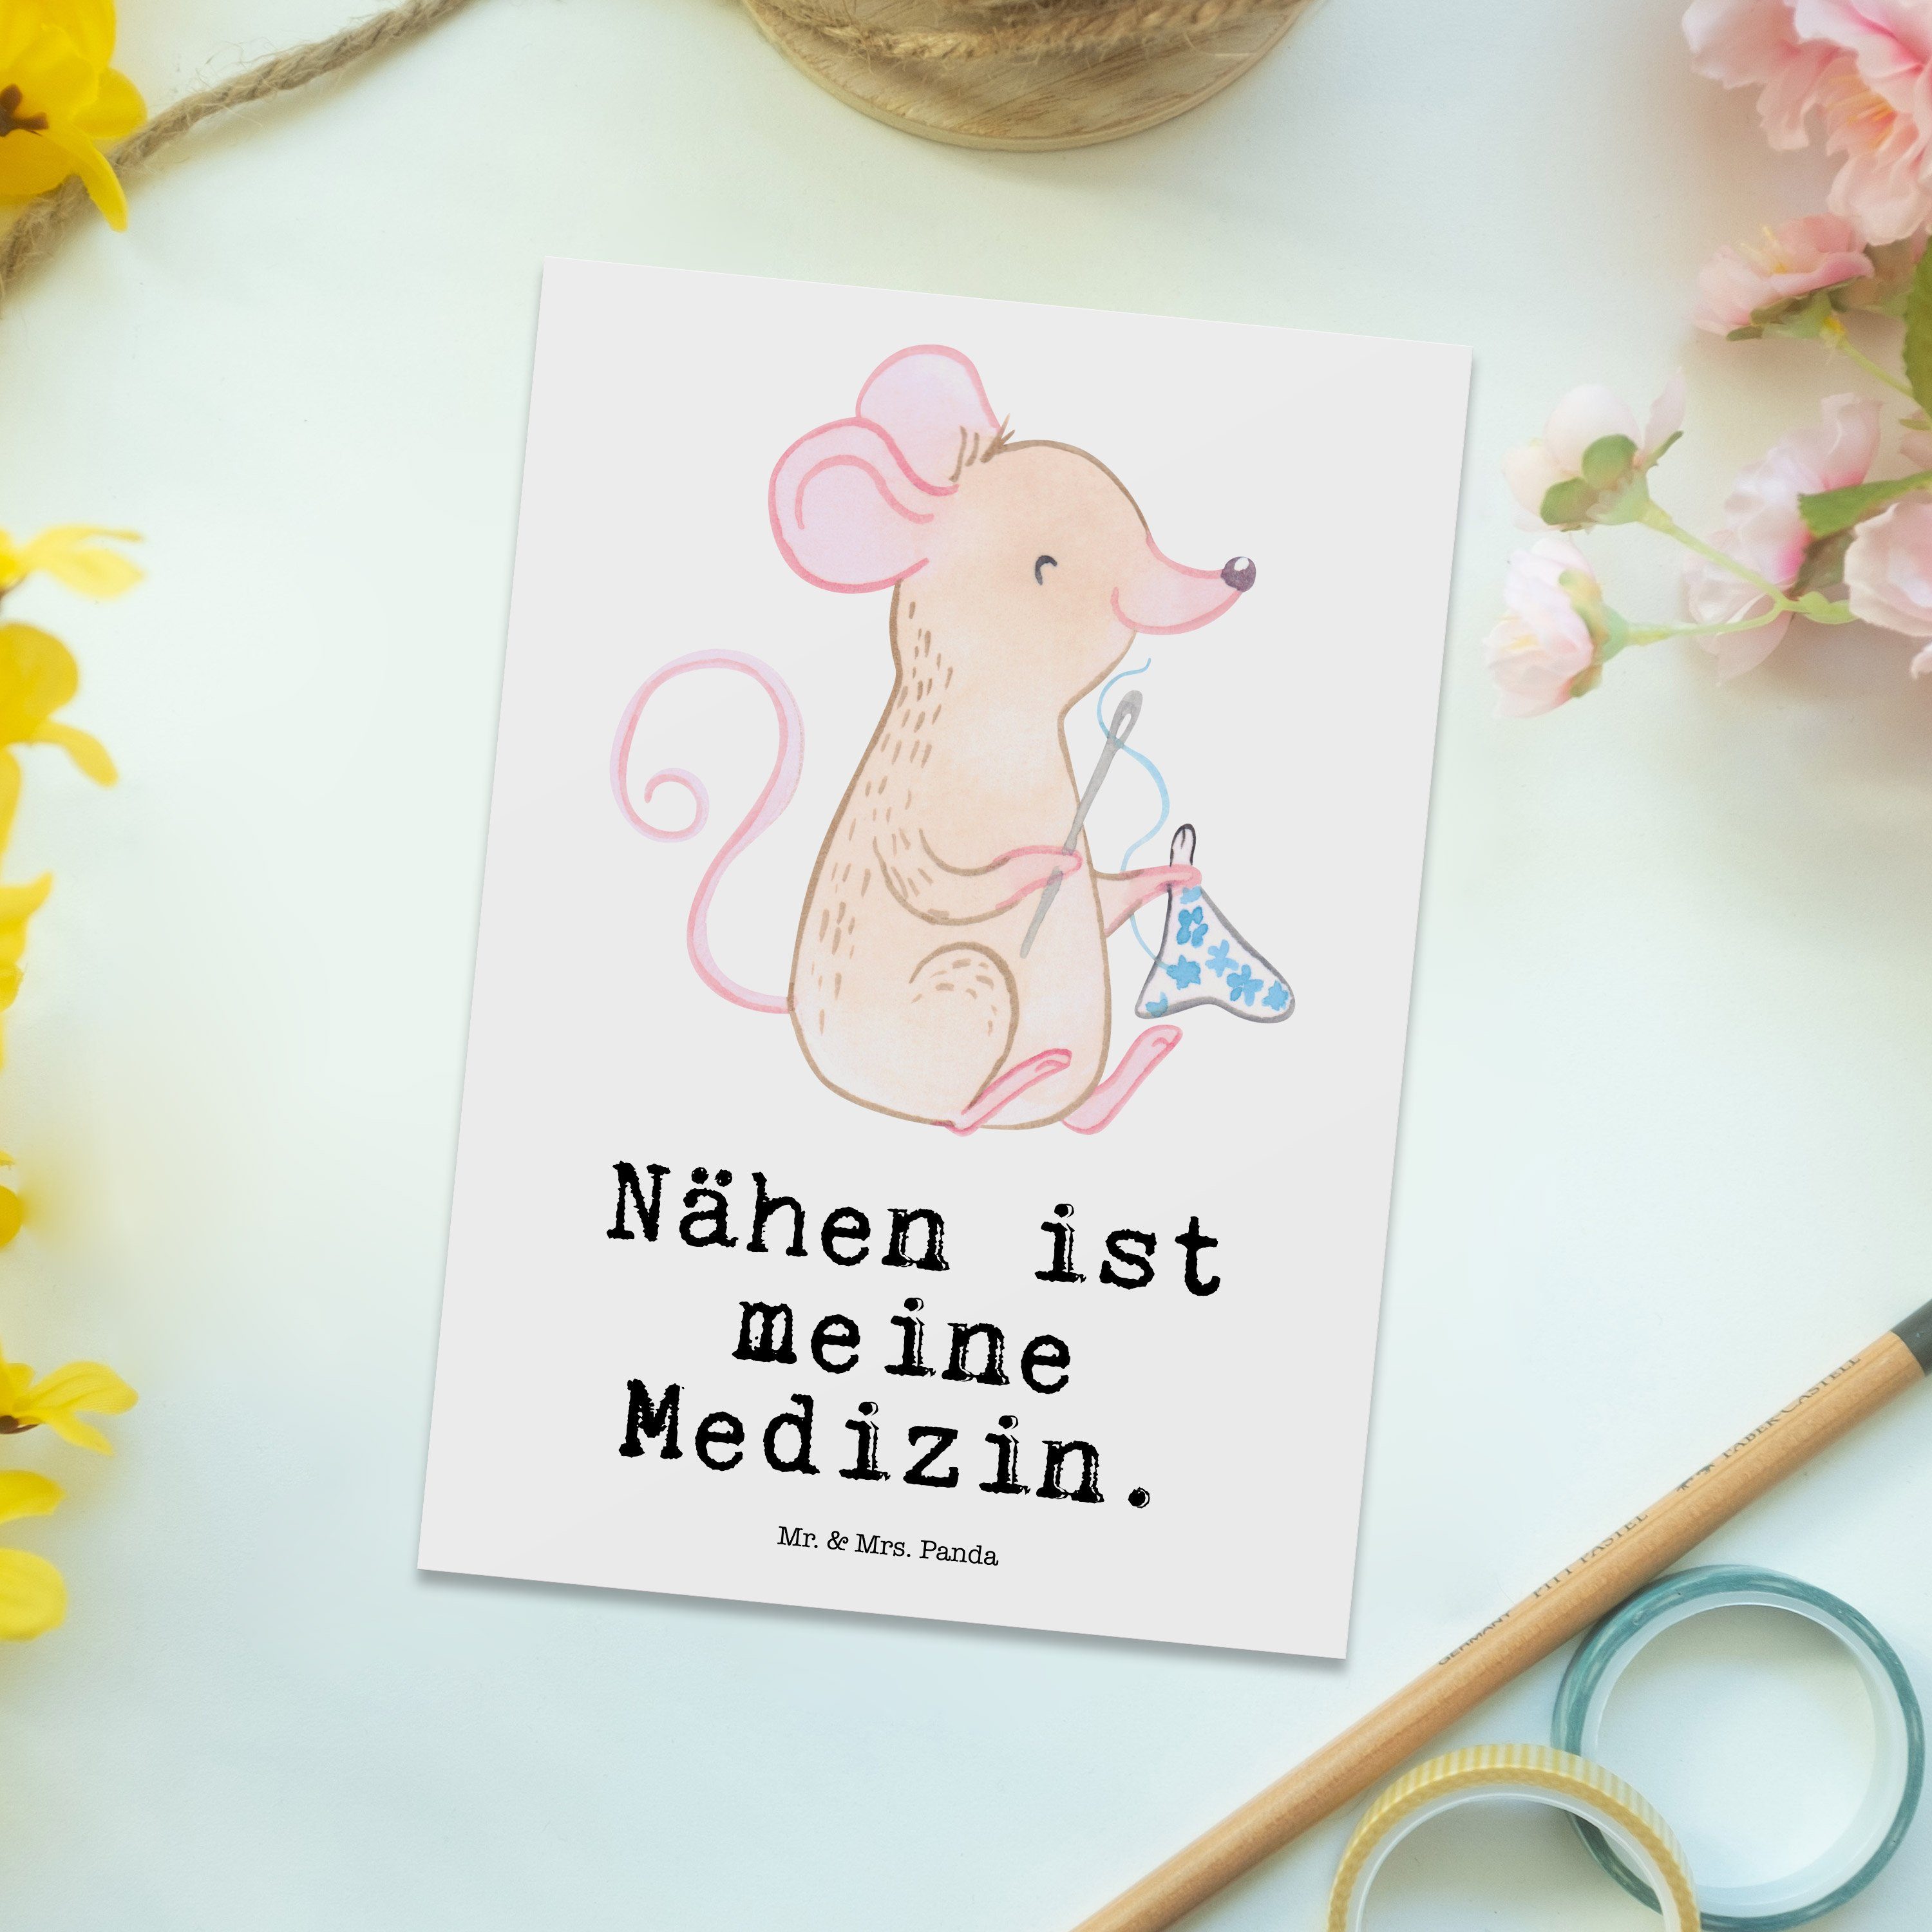 & Mr. Weiß - Medizin Nähprojekte, Sport, DIY, Postkarte Panda Geschenk, Nähen Nähkur Mrs. - Maus